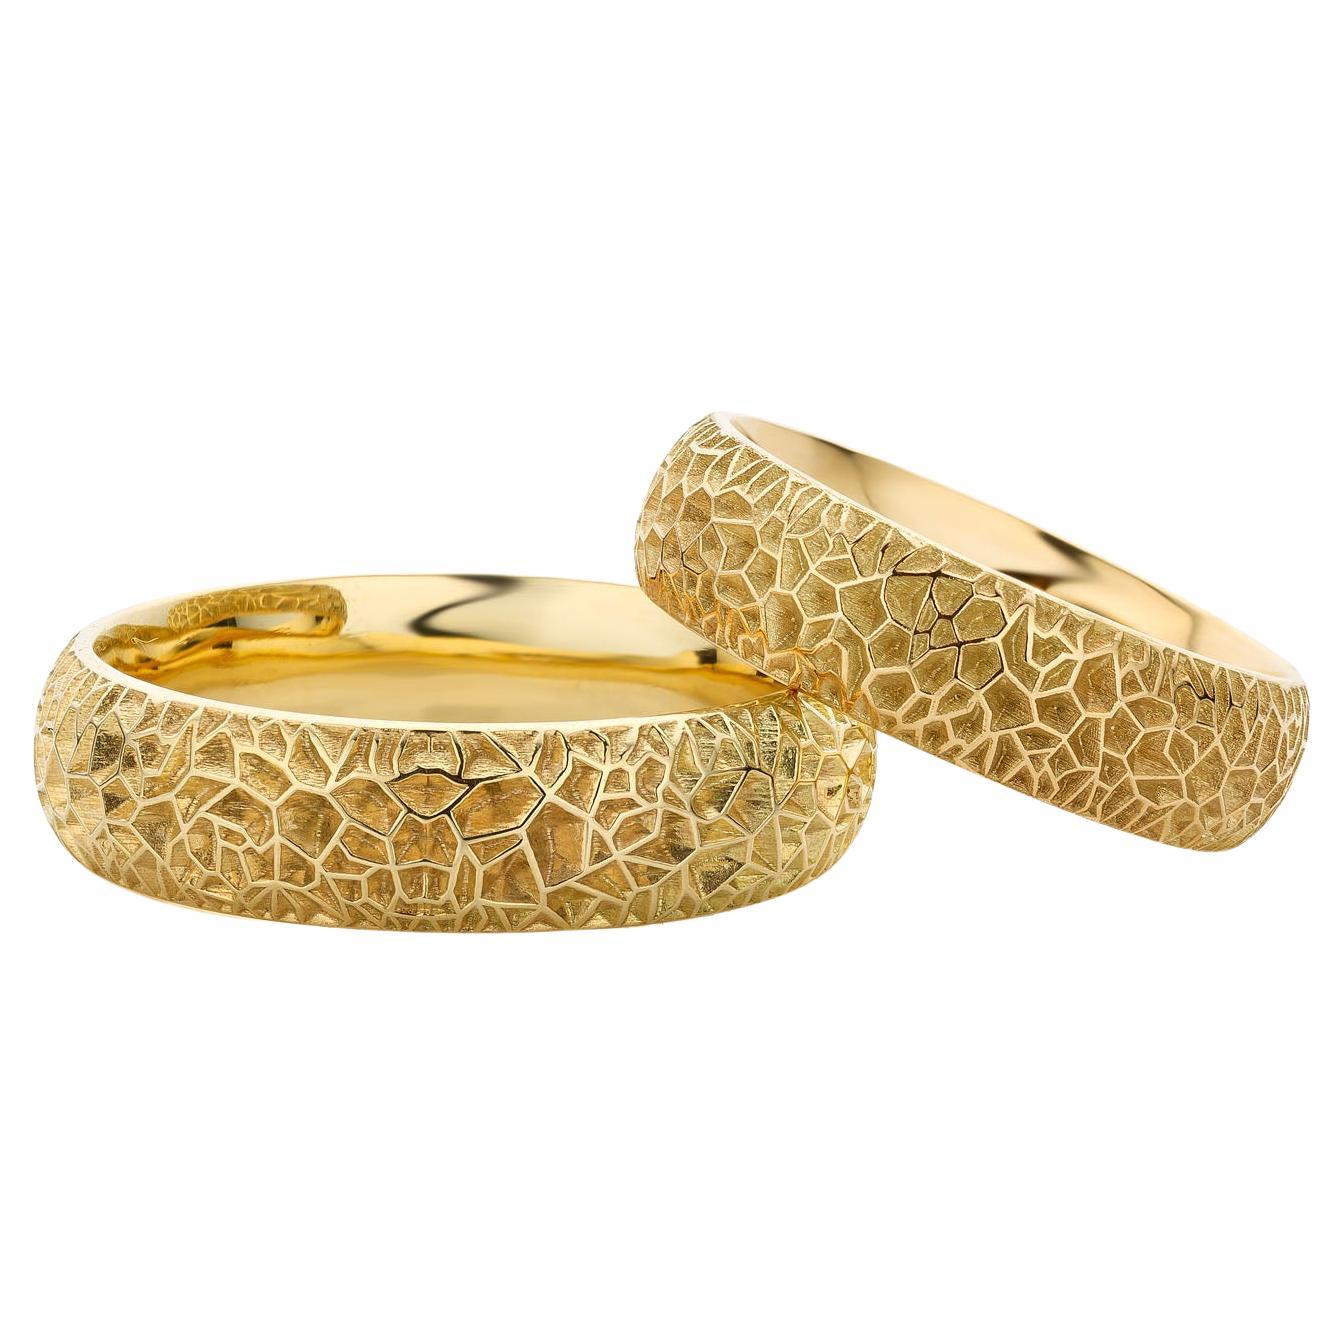 For Sale:  Cober Jewellery “Desert Footsteps” 14 Karat Yellow Gold Wedding Rings